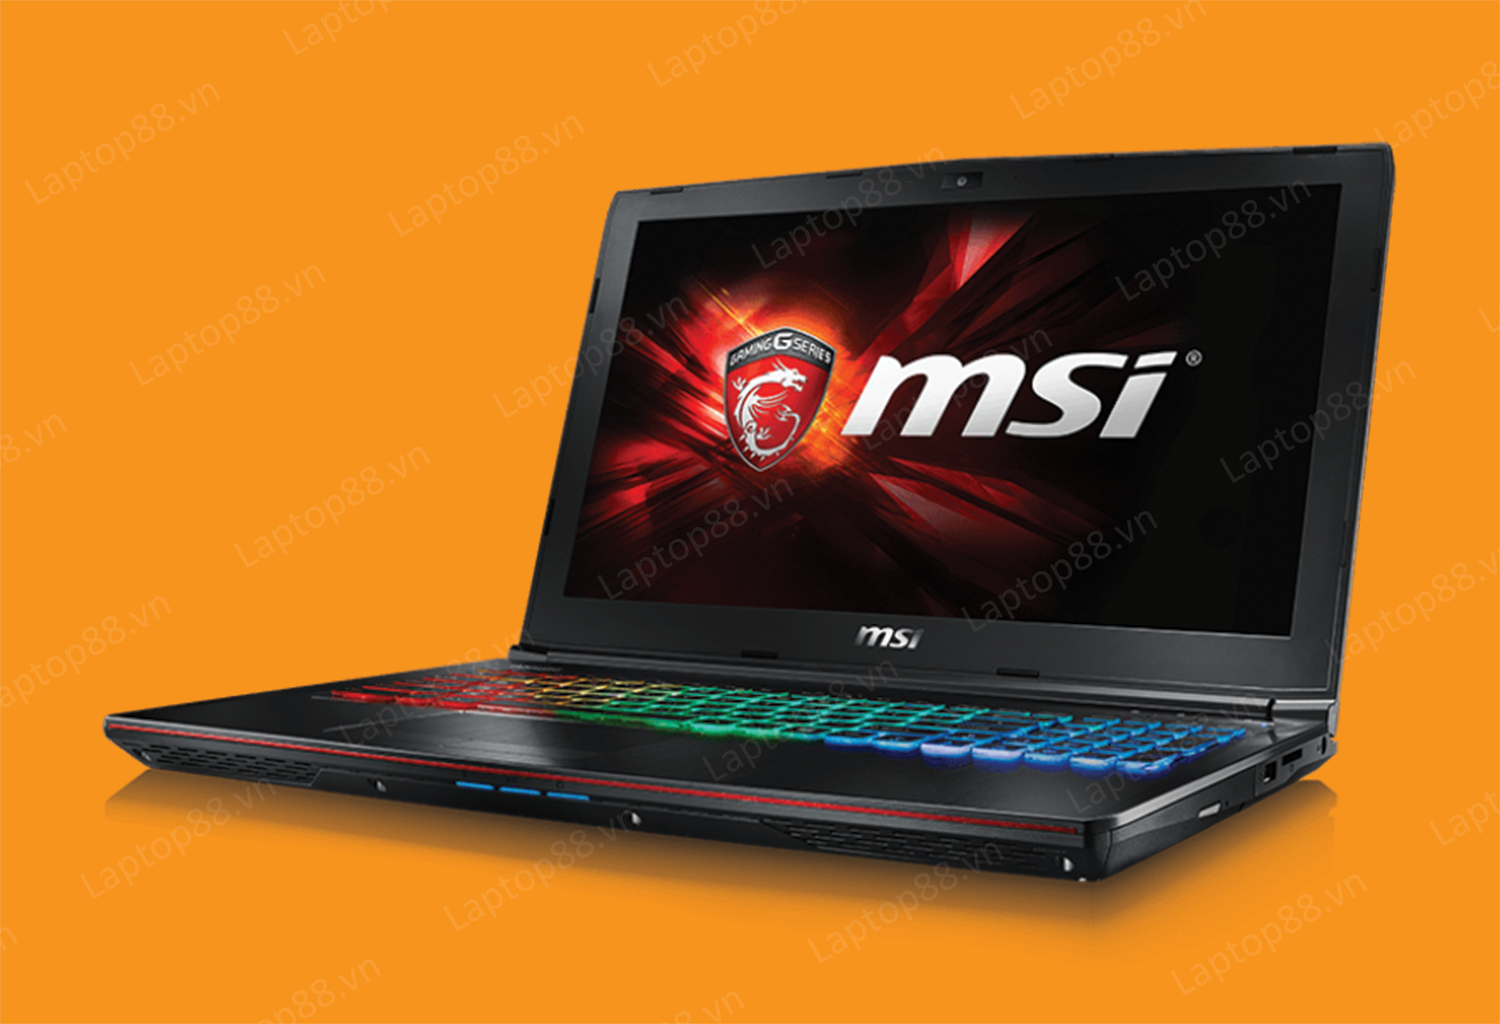 Laptop Gaming Msi Ge62 6qd Intel Core I7 6700hqram 8gbssd 128gb